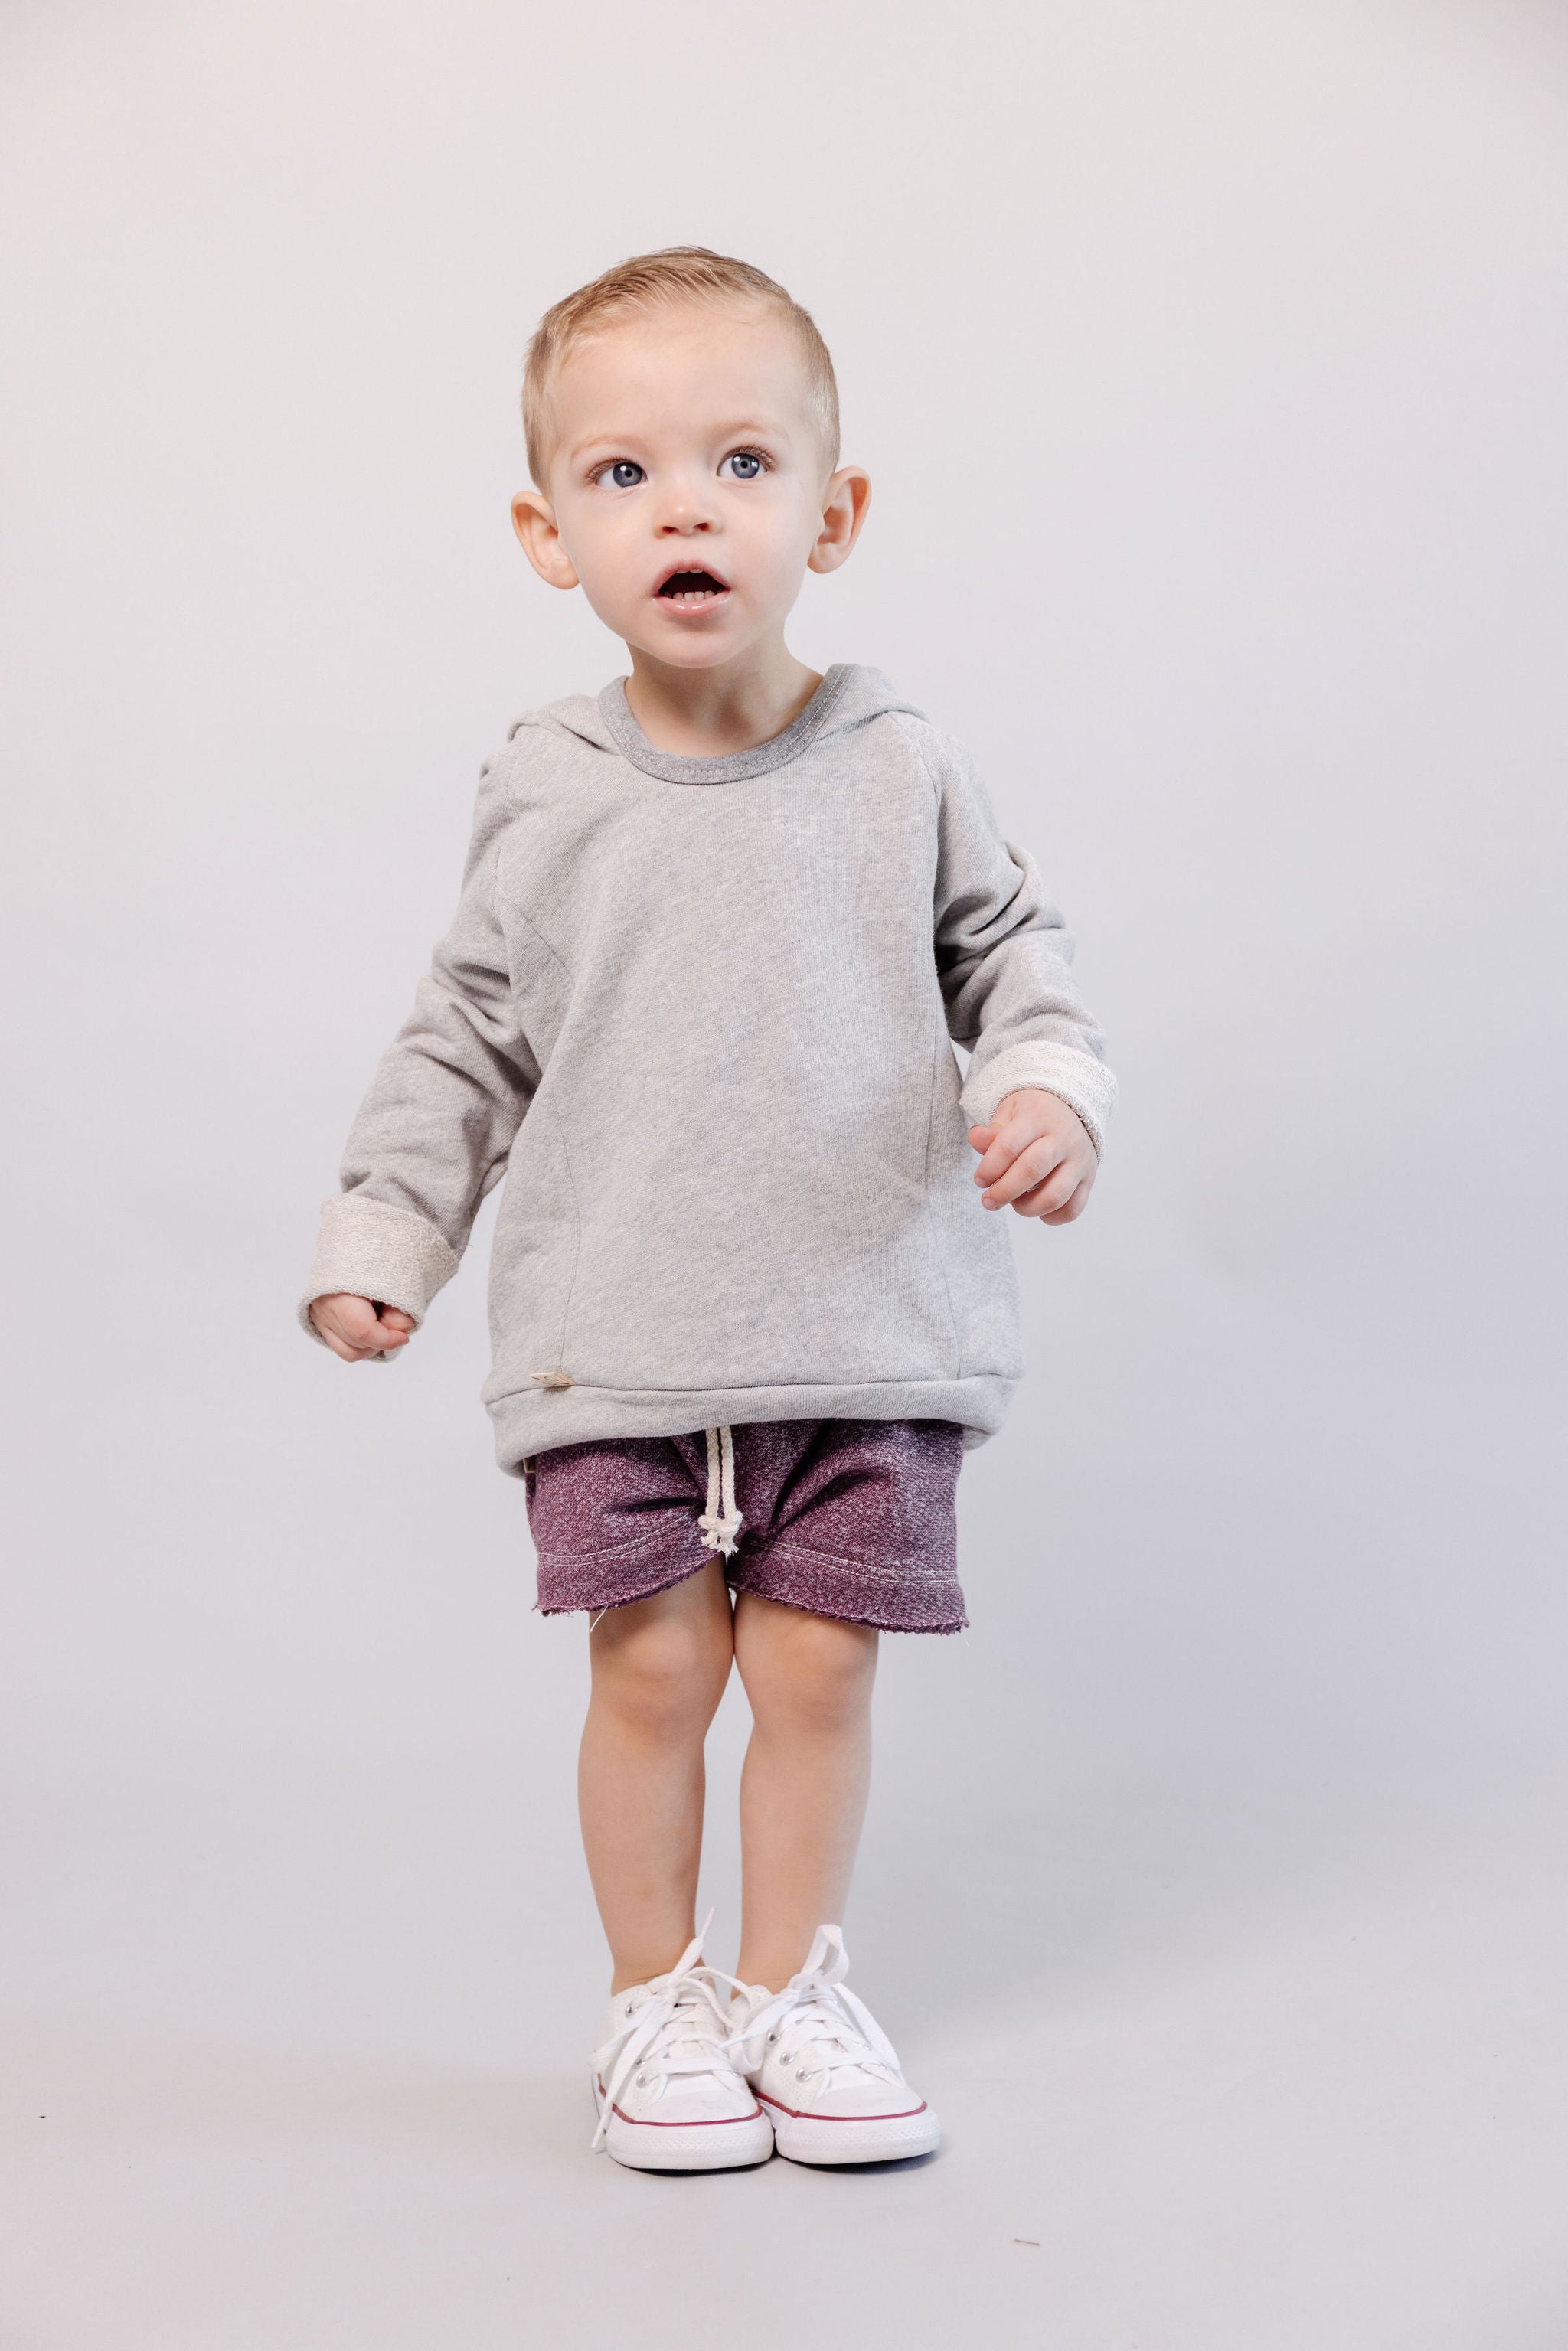 boy shorts - purple heather